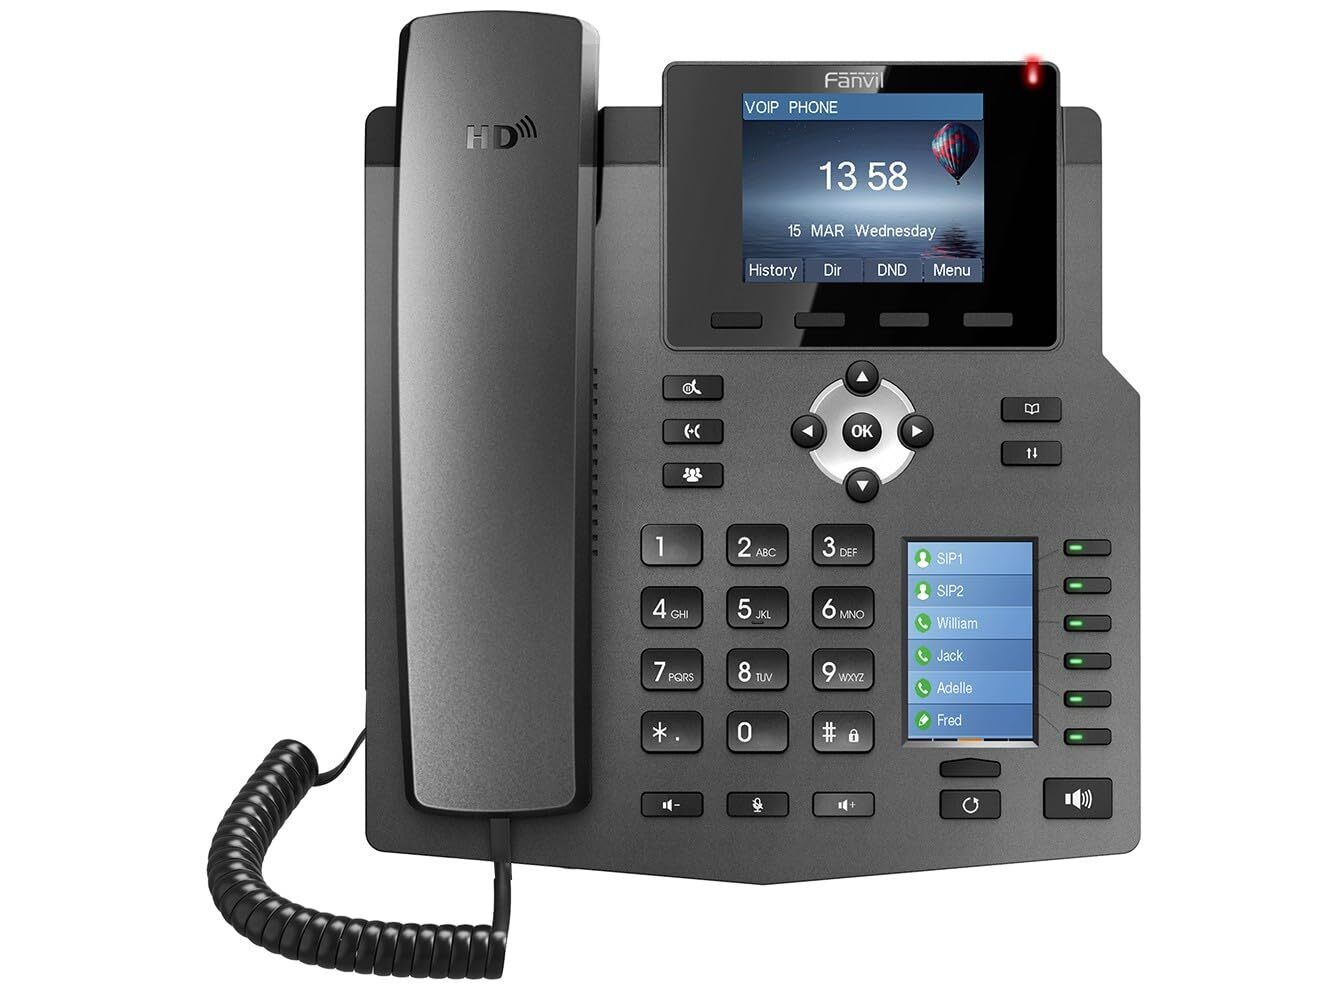 Fanvil Enterprise IP Phone X4 4 SIP Line PoE Capable and 2.8 Color Screen